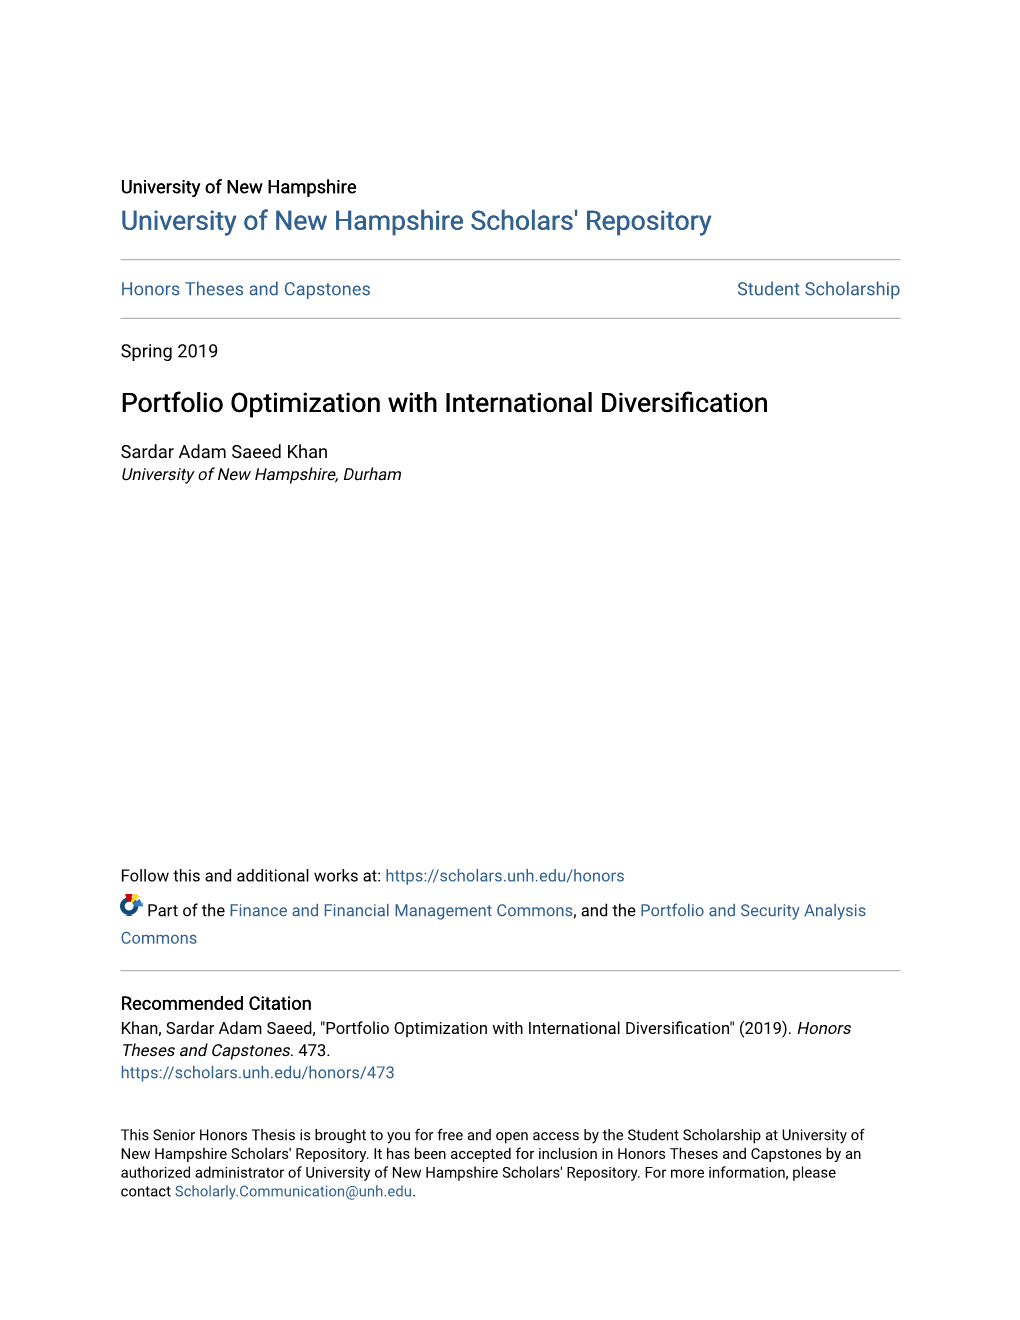 Portfolio Optimization with International Diversification